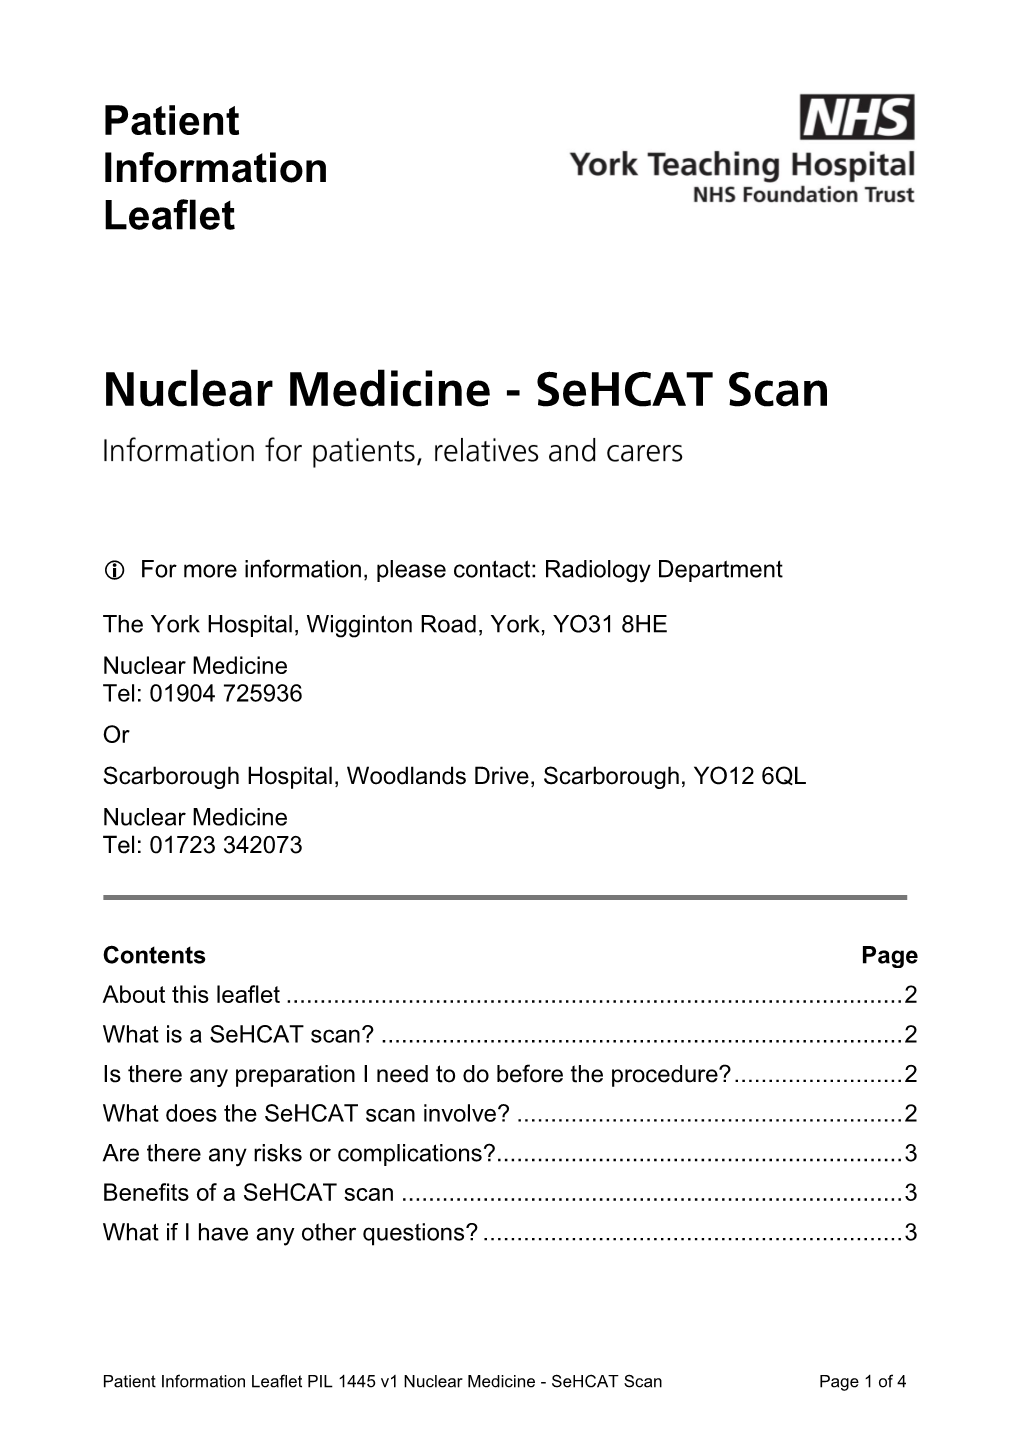 Nuclear Medicine - Sehcat Scan